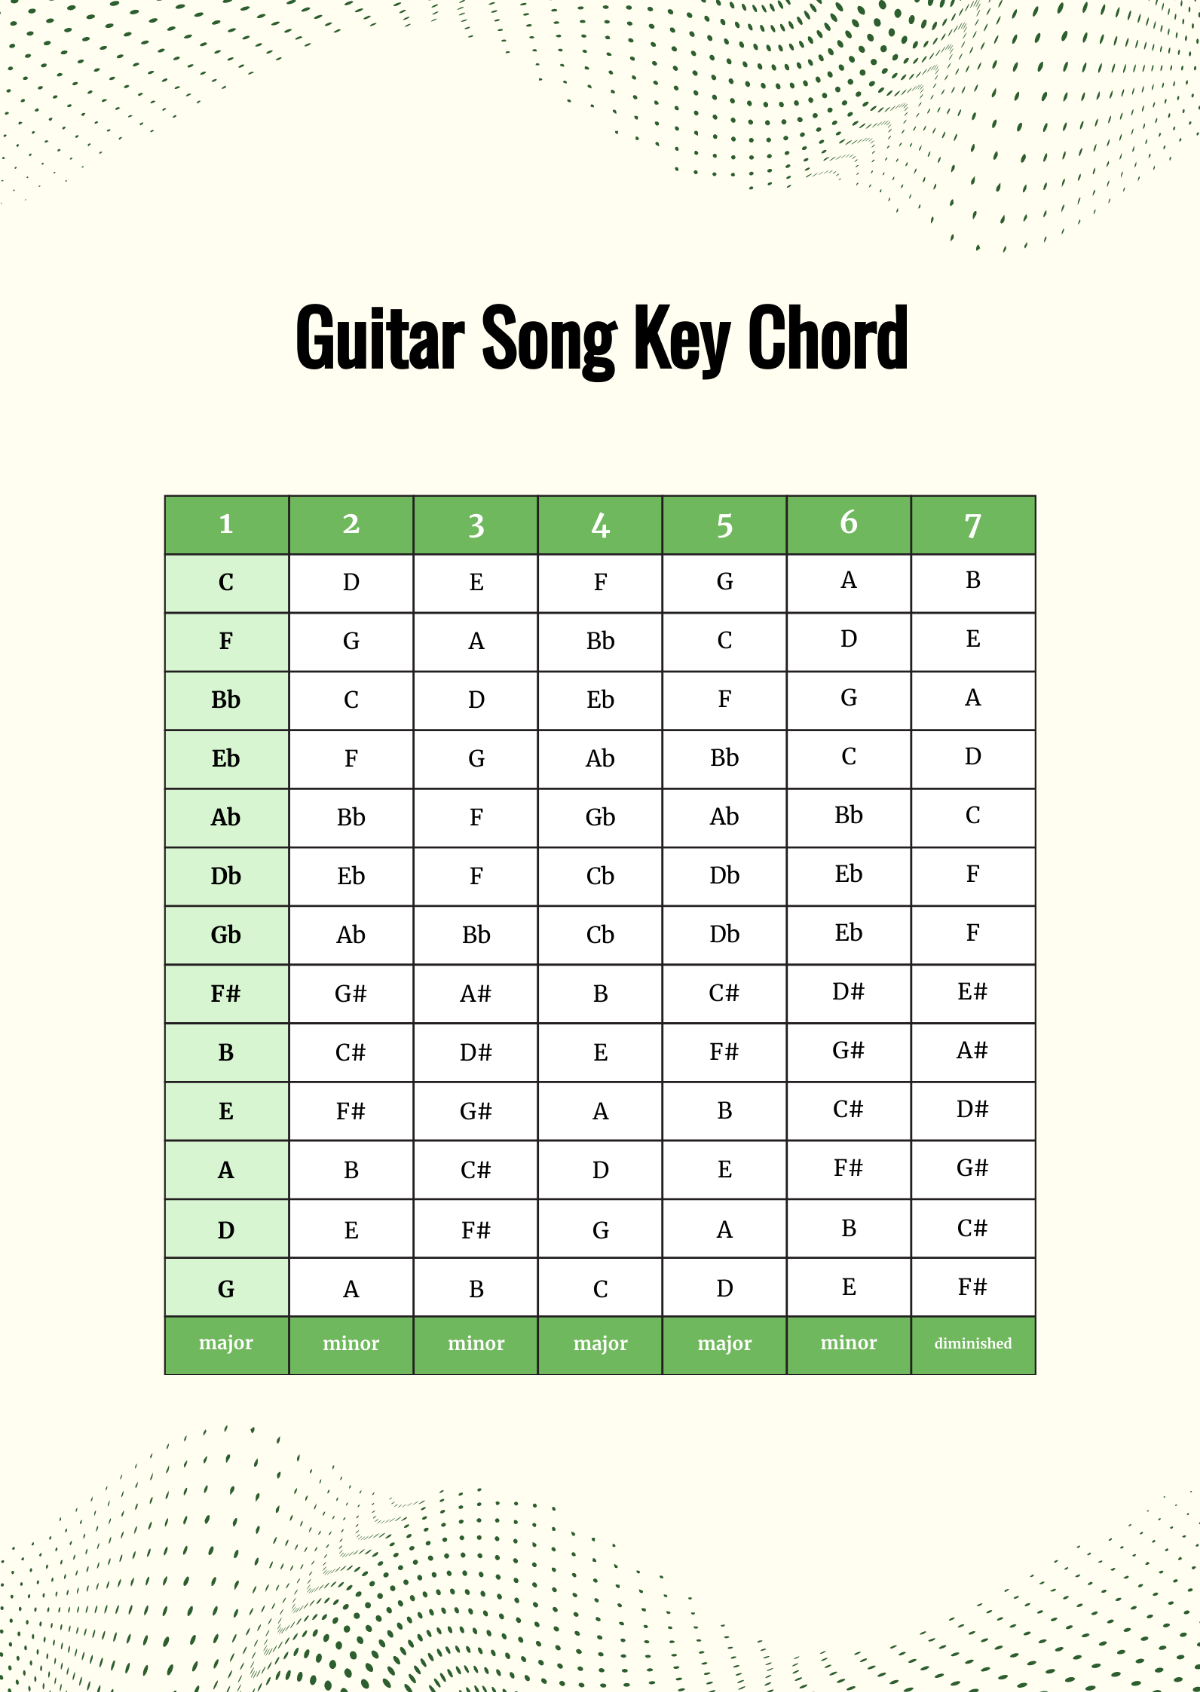 Guitar Song Key Chord Chart Template